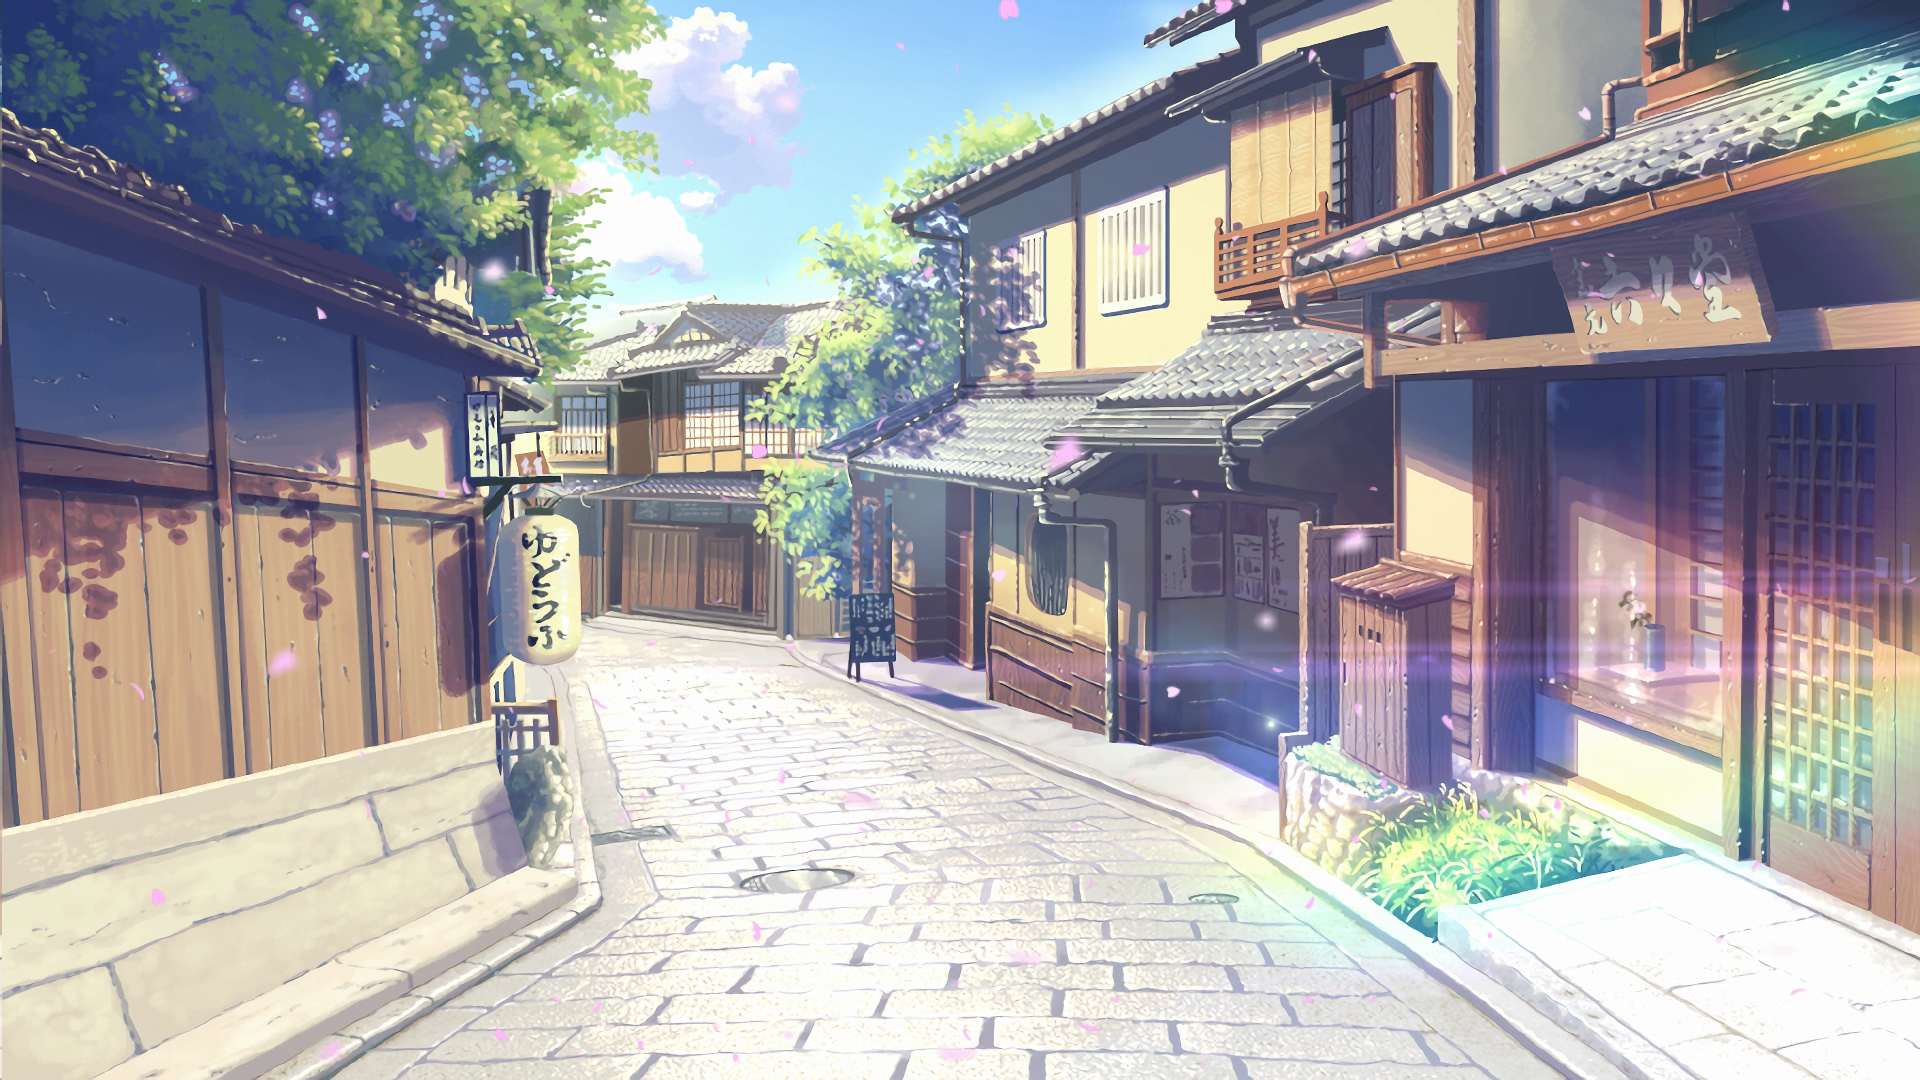 Anime Street HD Wallpaper